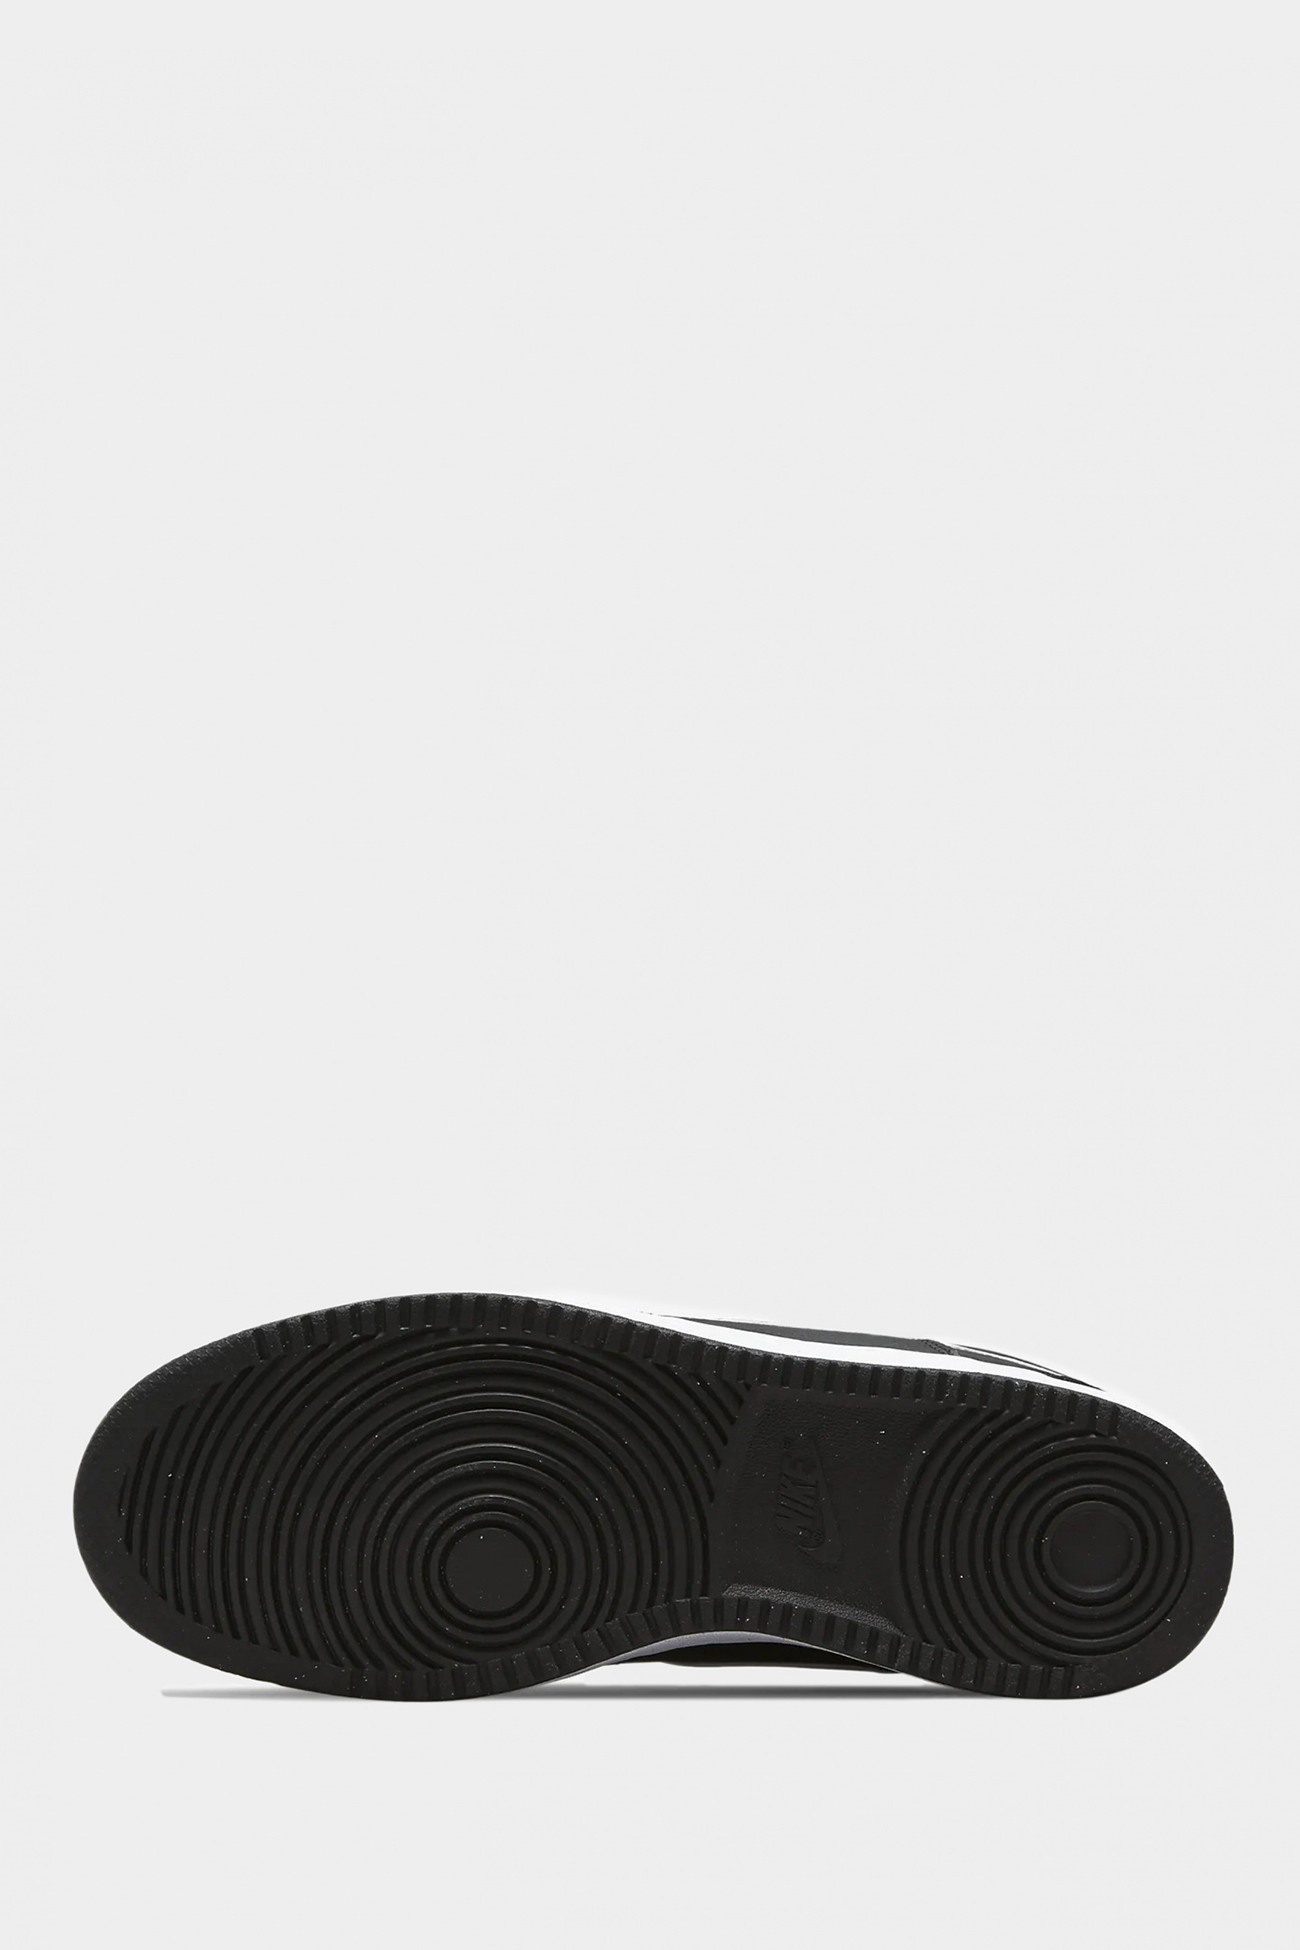 Ботинки женские Nike NIKE CITY CLASSIC BOOT черные DQ5601-001 изображение 8